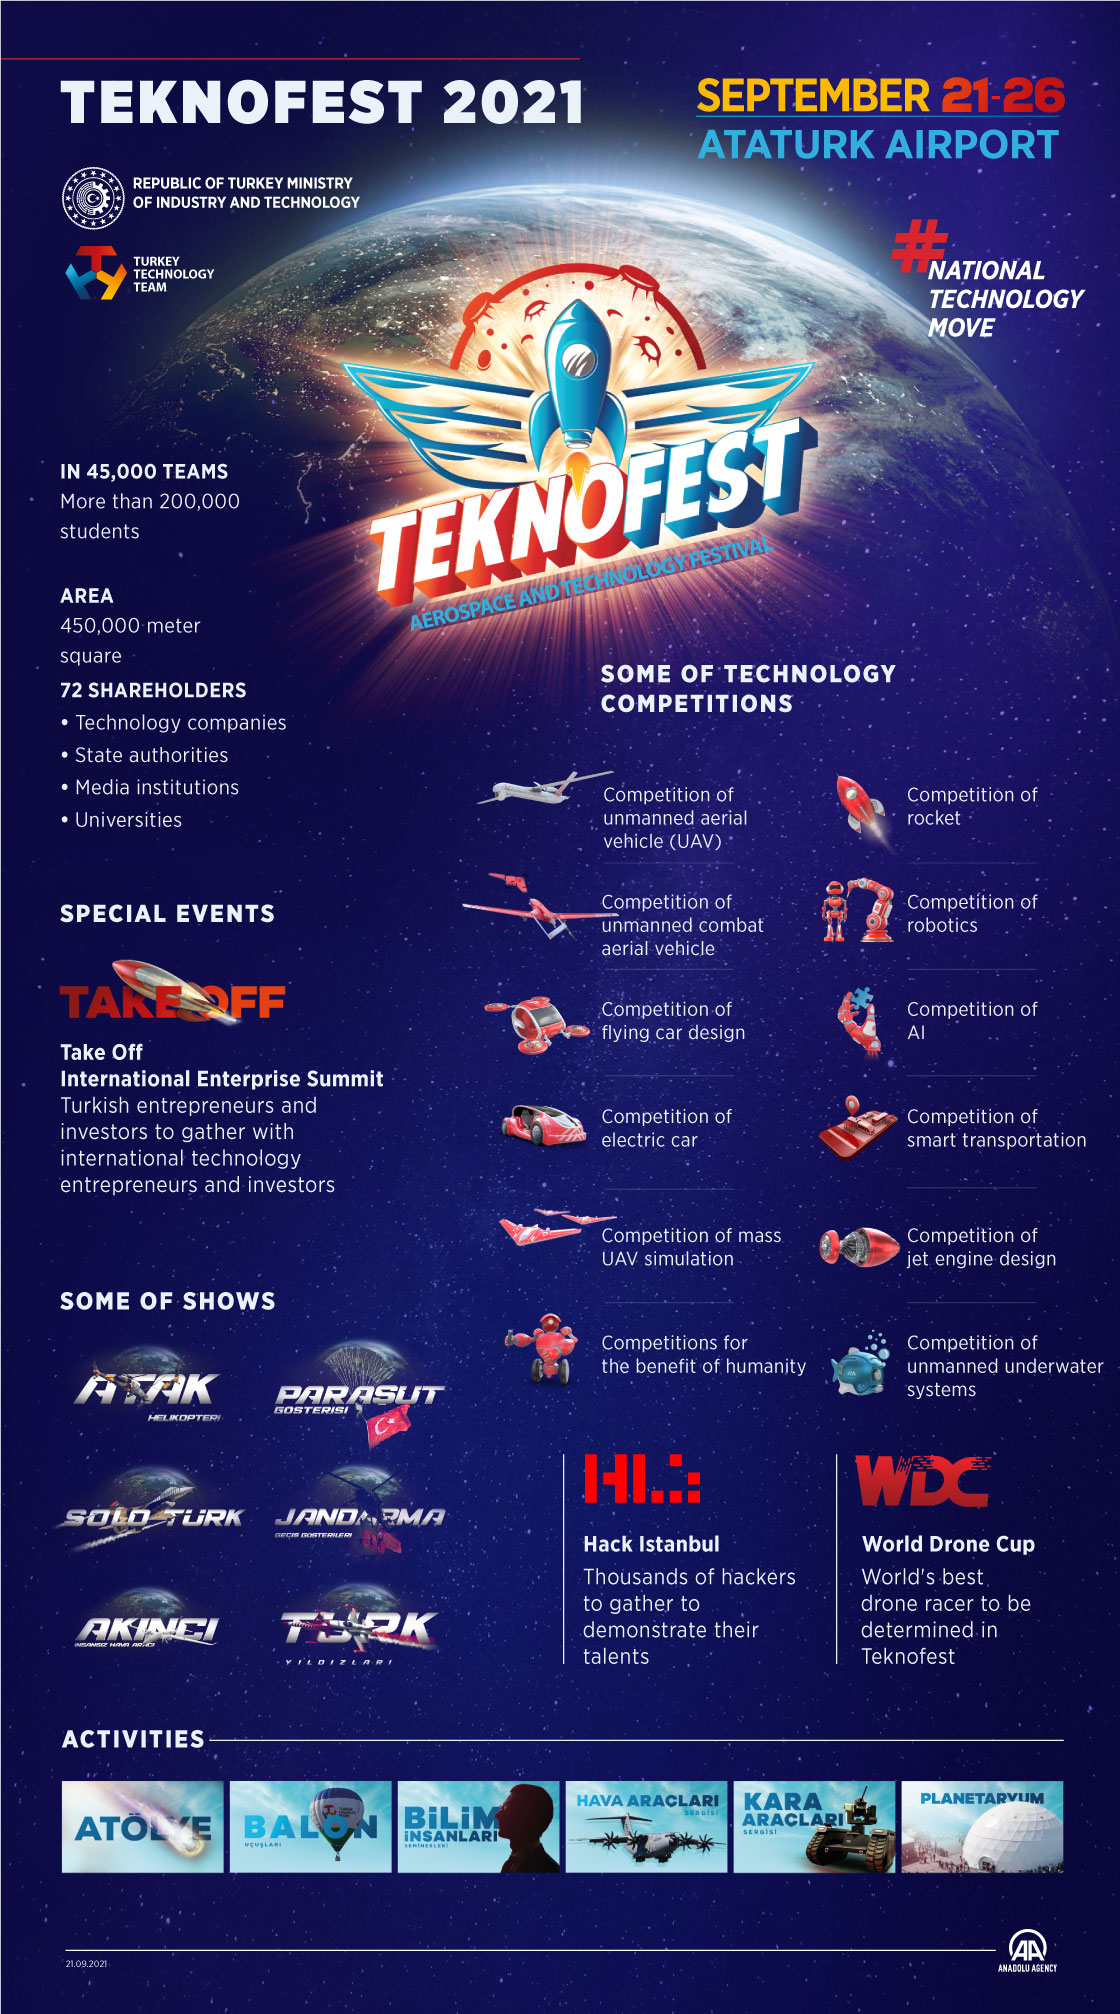 Premier Turkish tech event TEKNOFEST kicks off in Istanbul